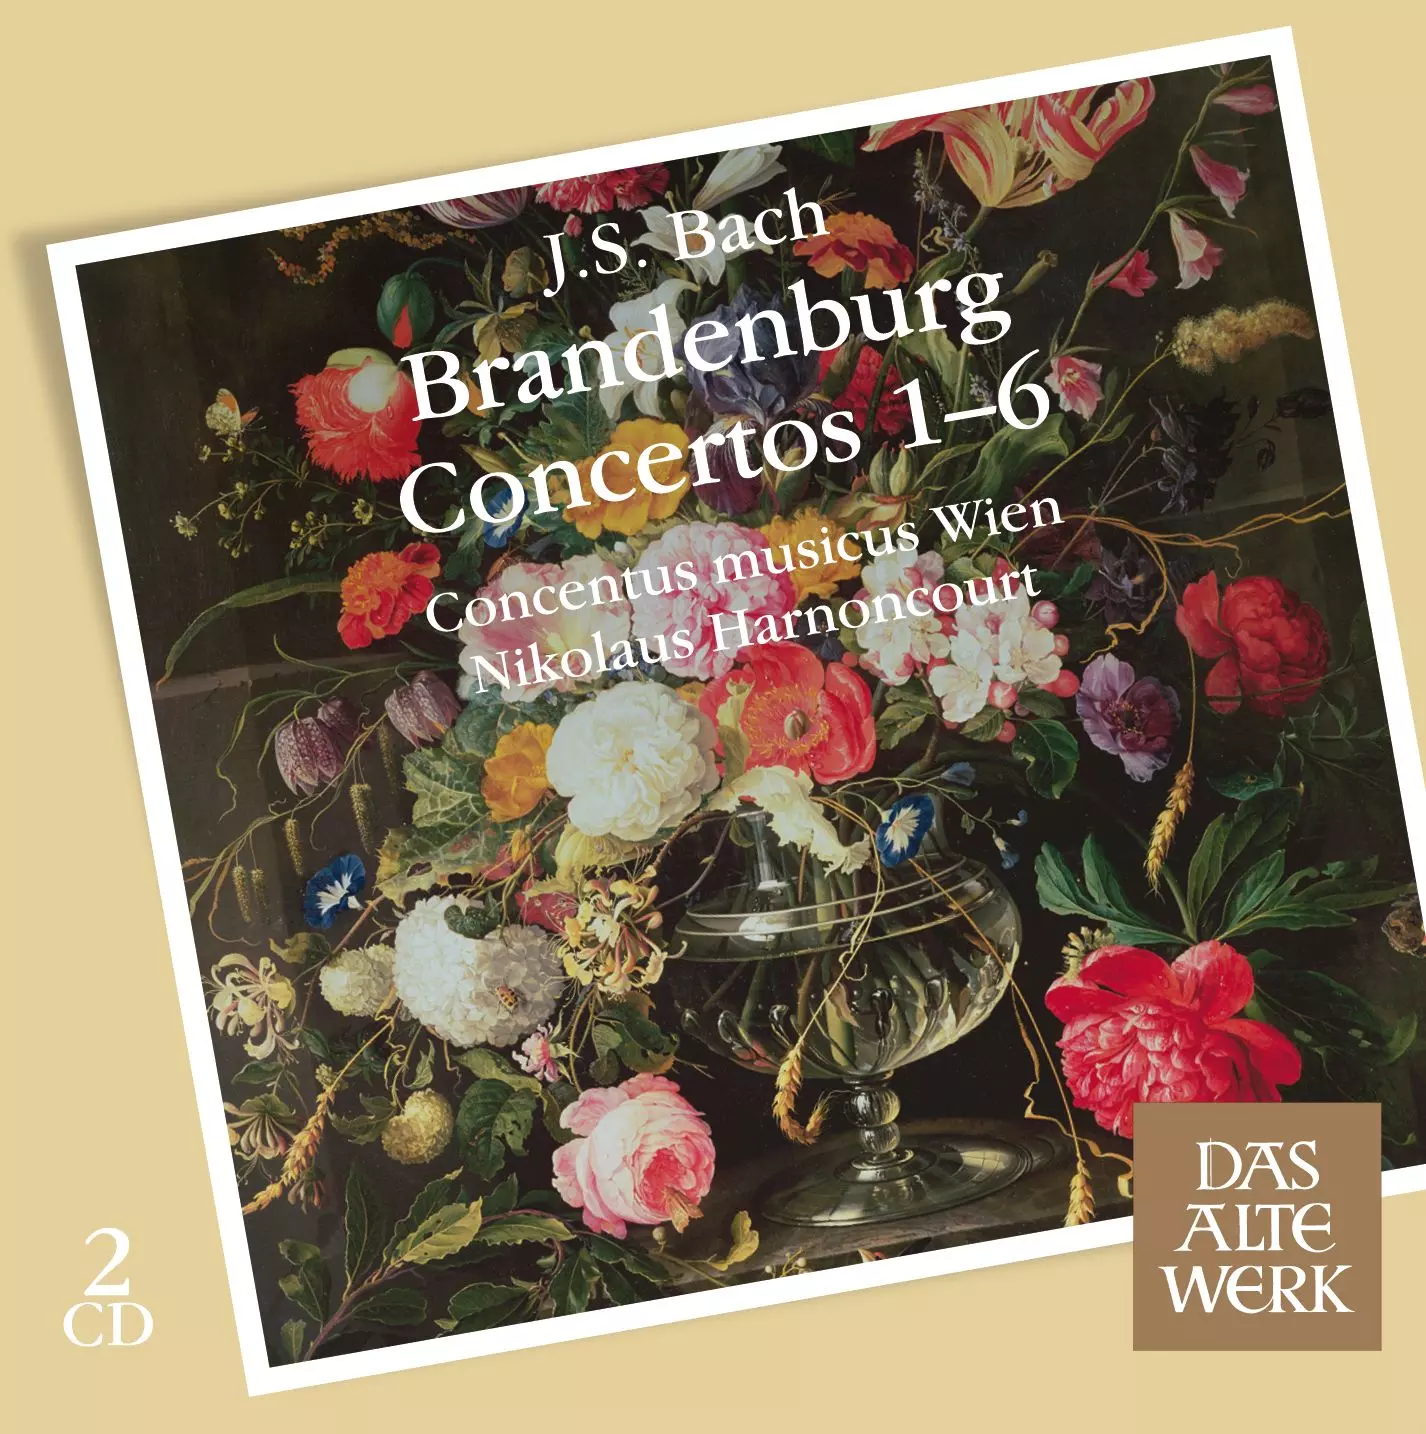 Brandenburg Concertos 1 - 6